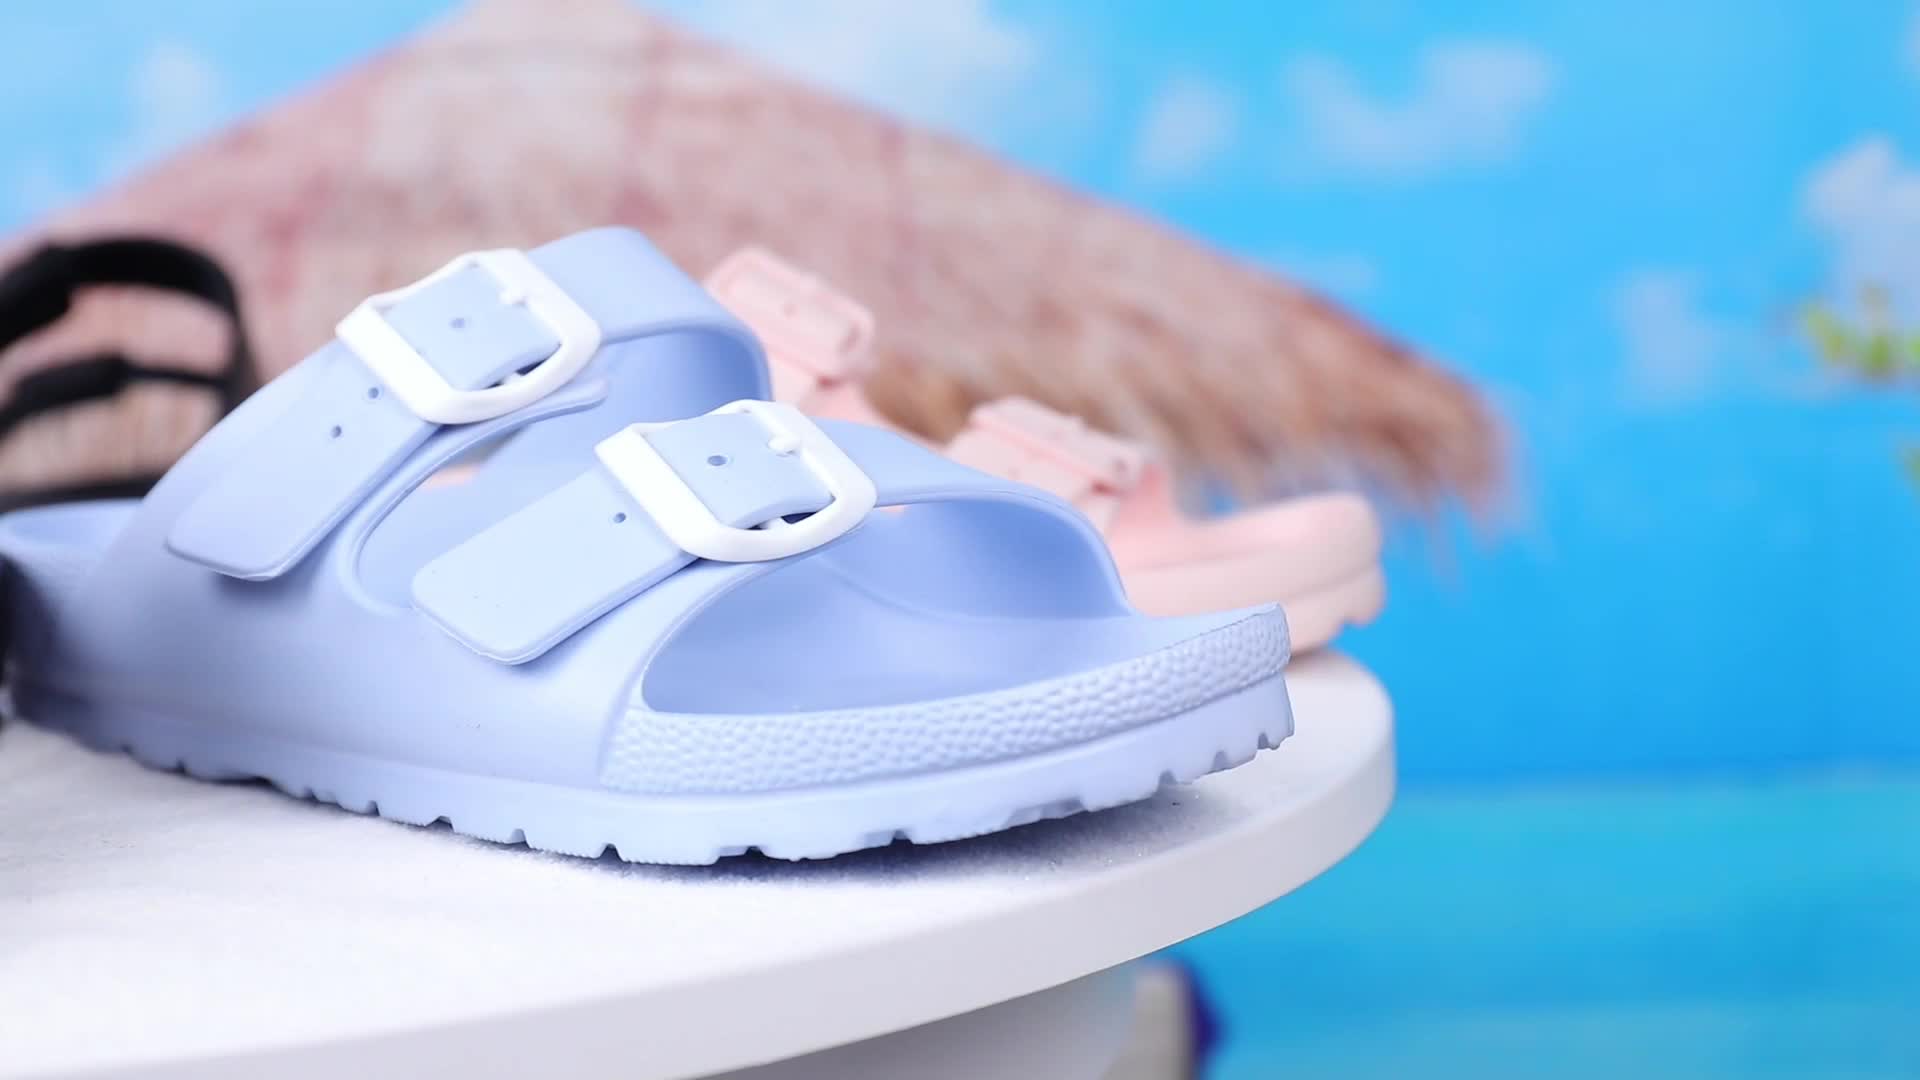 EastVita Cloud Slides Double Buckle Adjustable Summer Beach Pool Pillow  Slippers Thick Sole Cushion EVA Sandals 